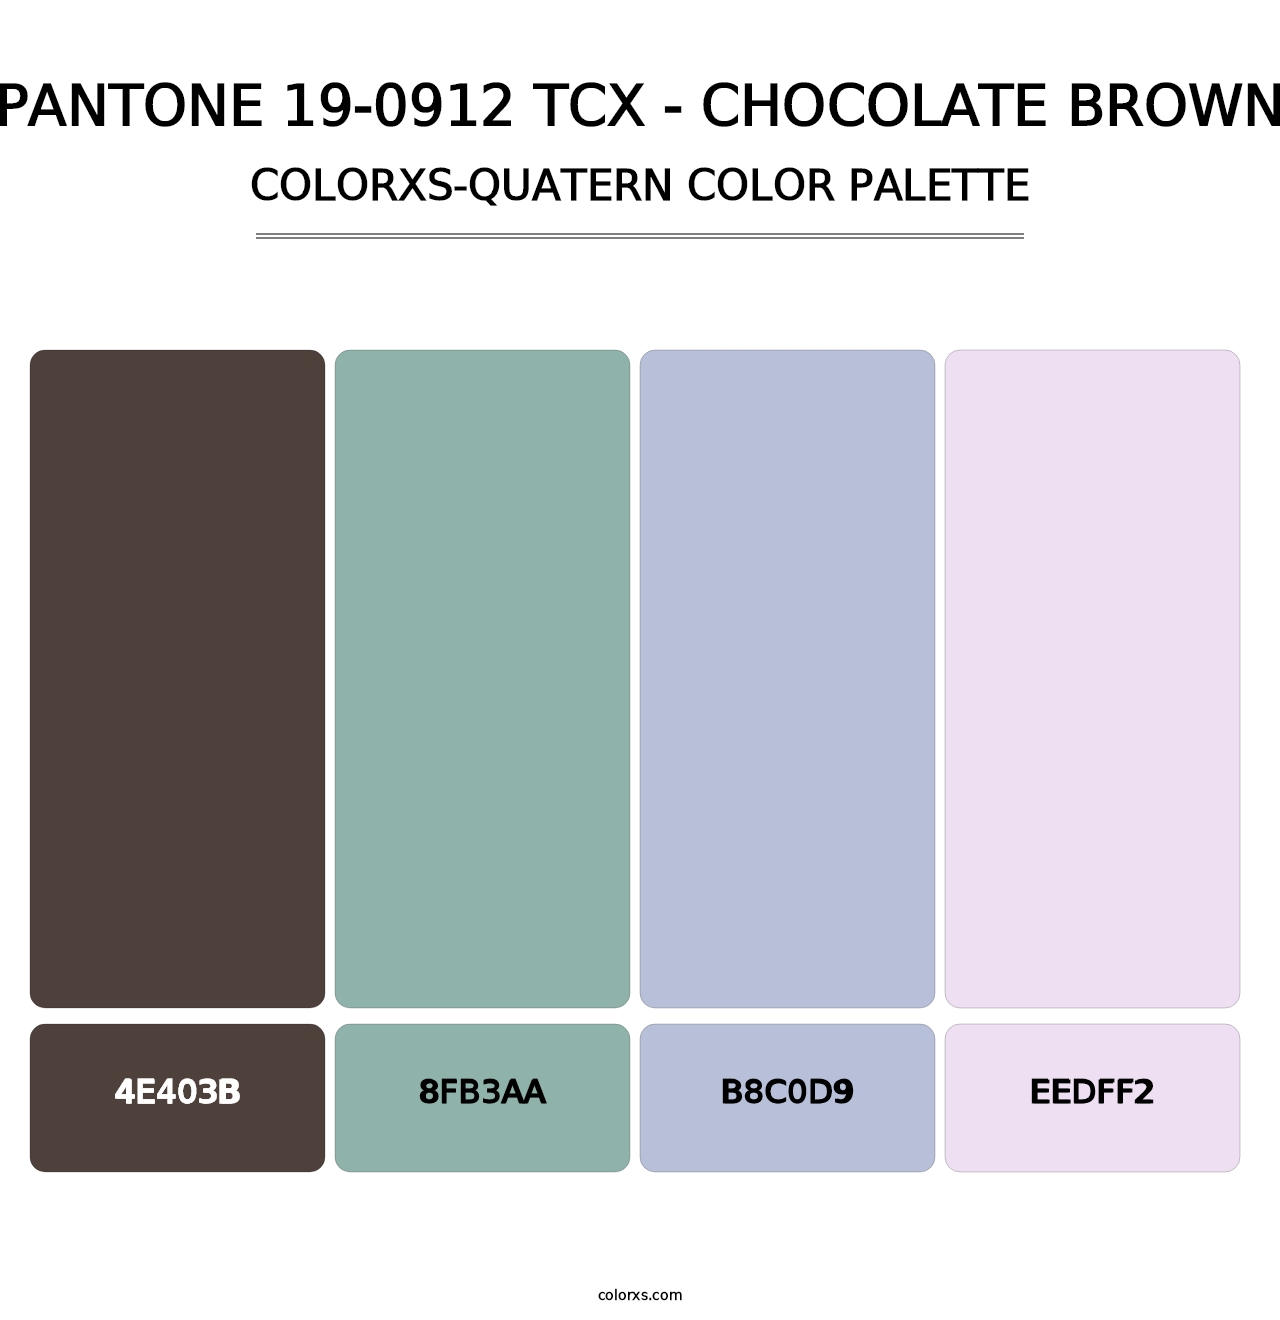 PANTONE 19-0912 TCX - Chocolate Brown - Colorxs Quatern Palette